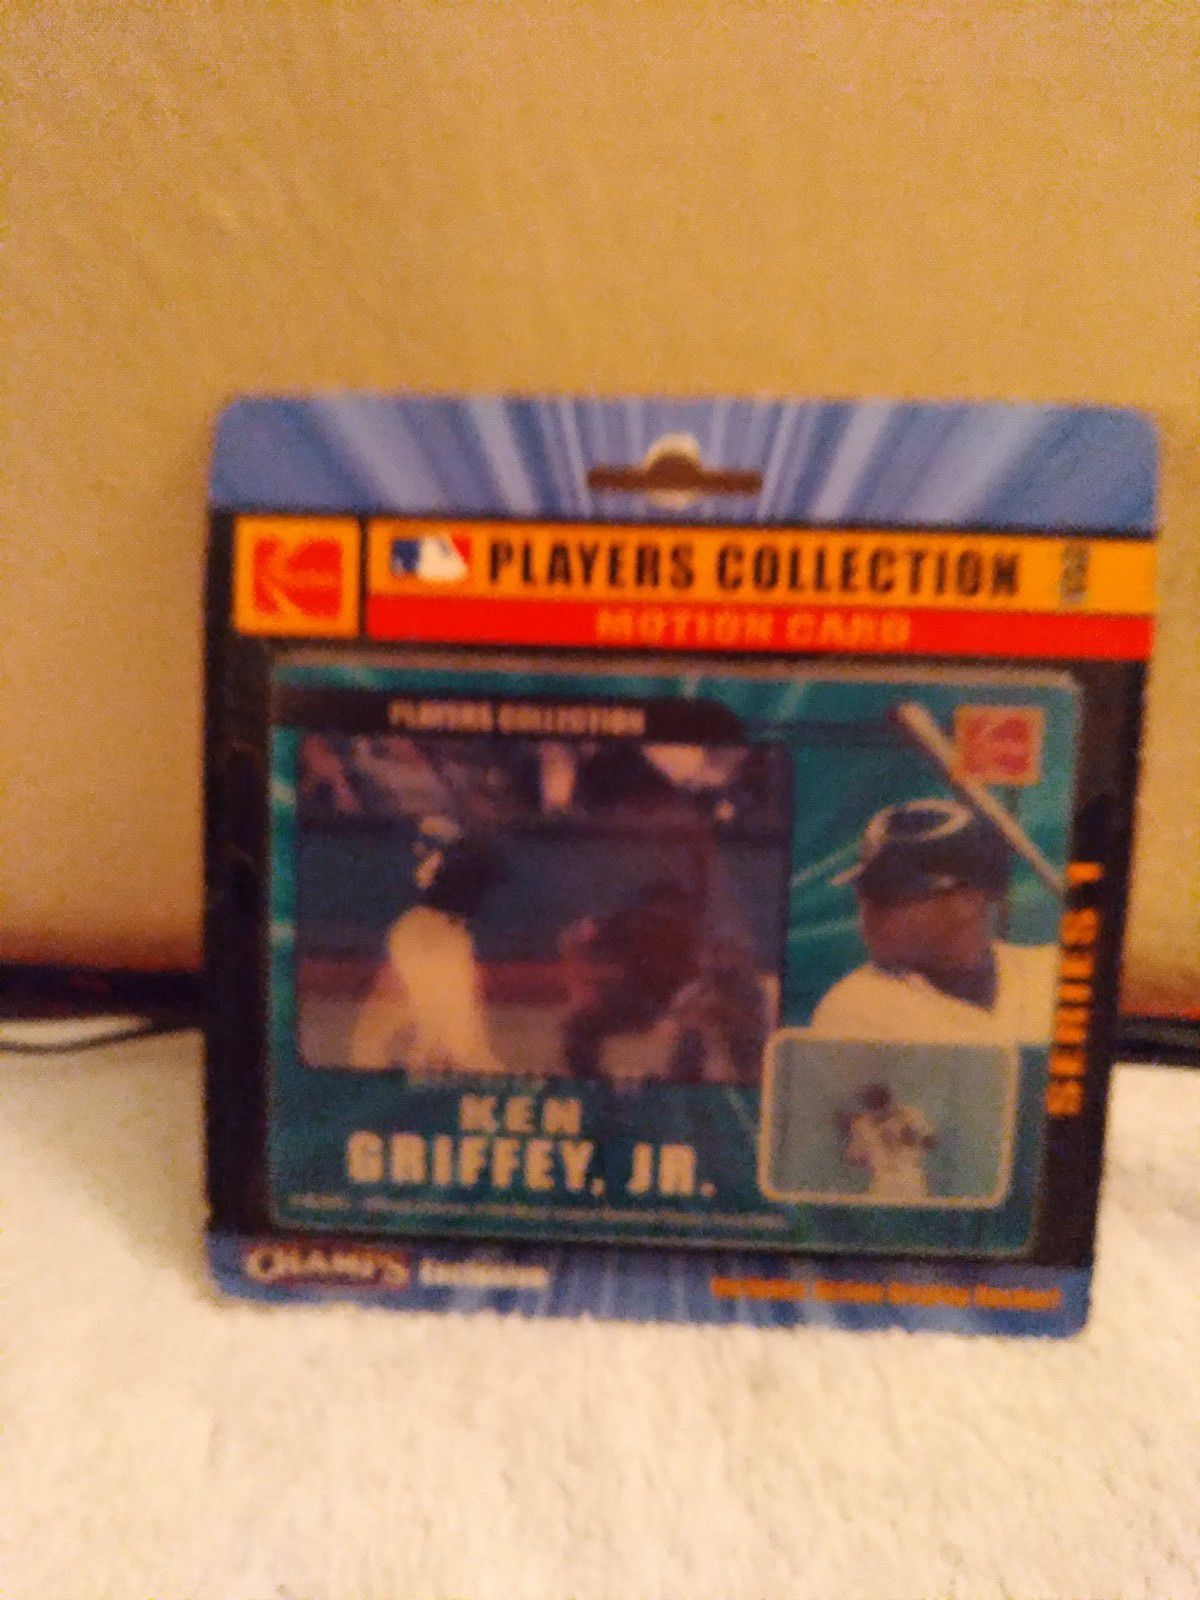 Ken Griffey Jr a hologram baseball card . Make me an offer I can't resist!